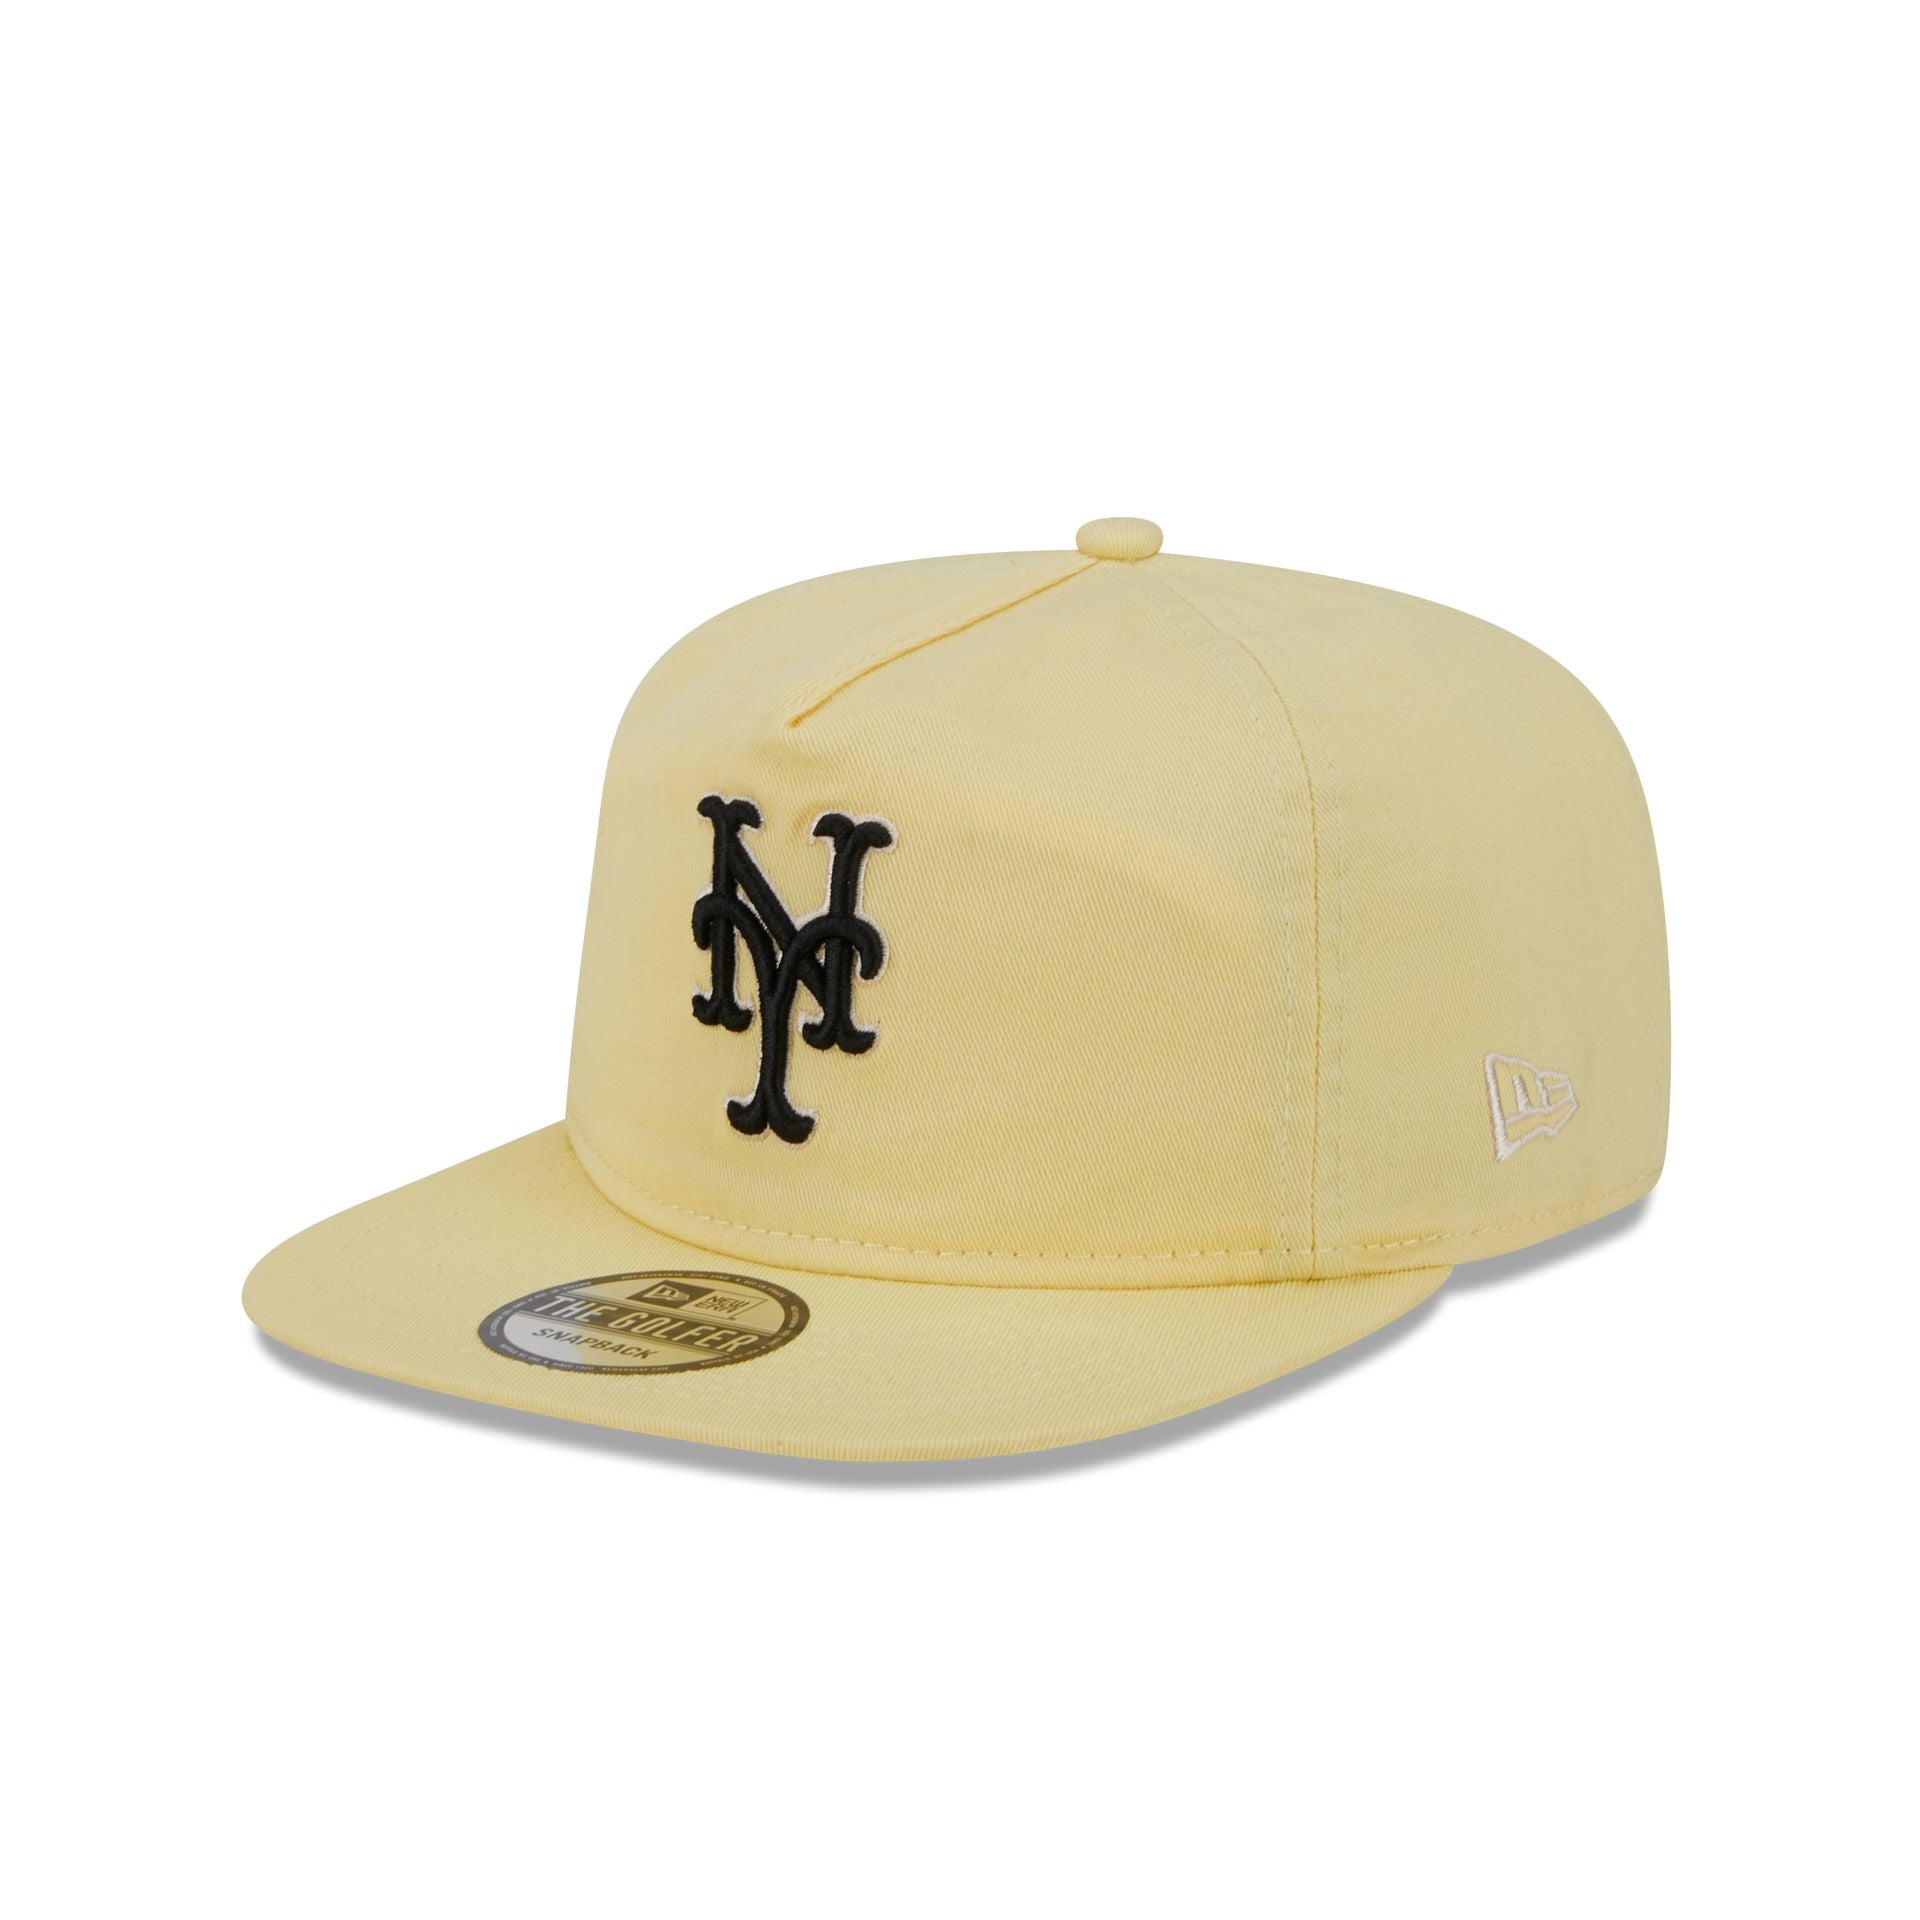 New York Mets Pastel Golfer Hat, Yellow, by New Era